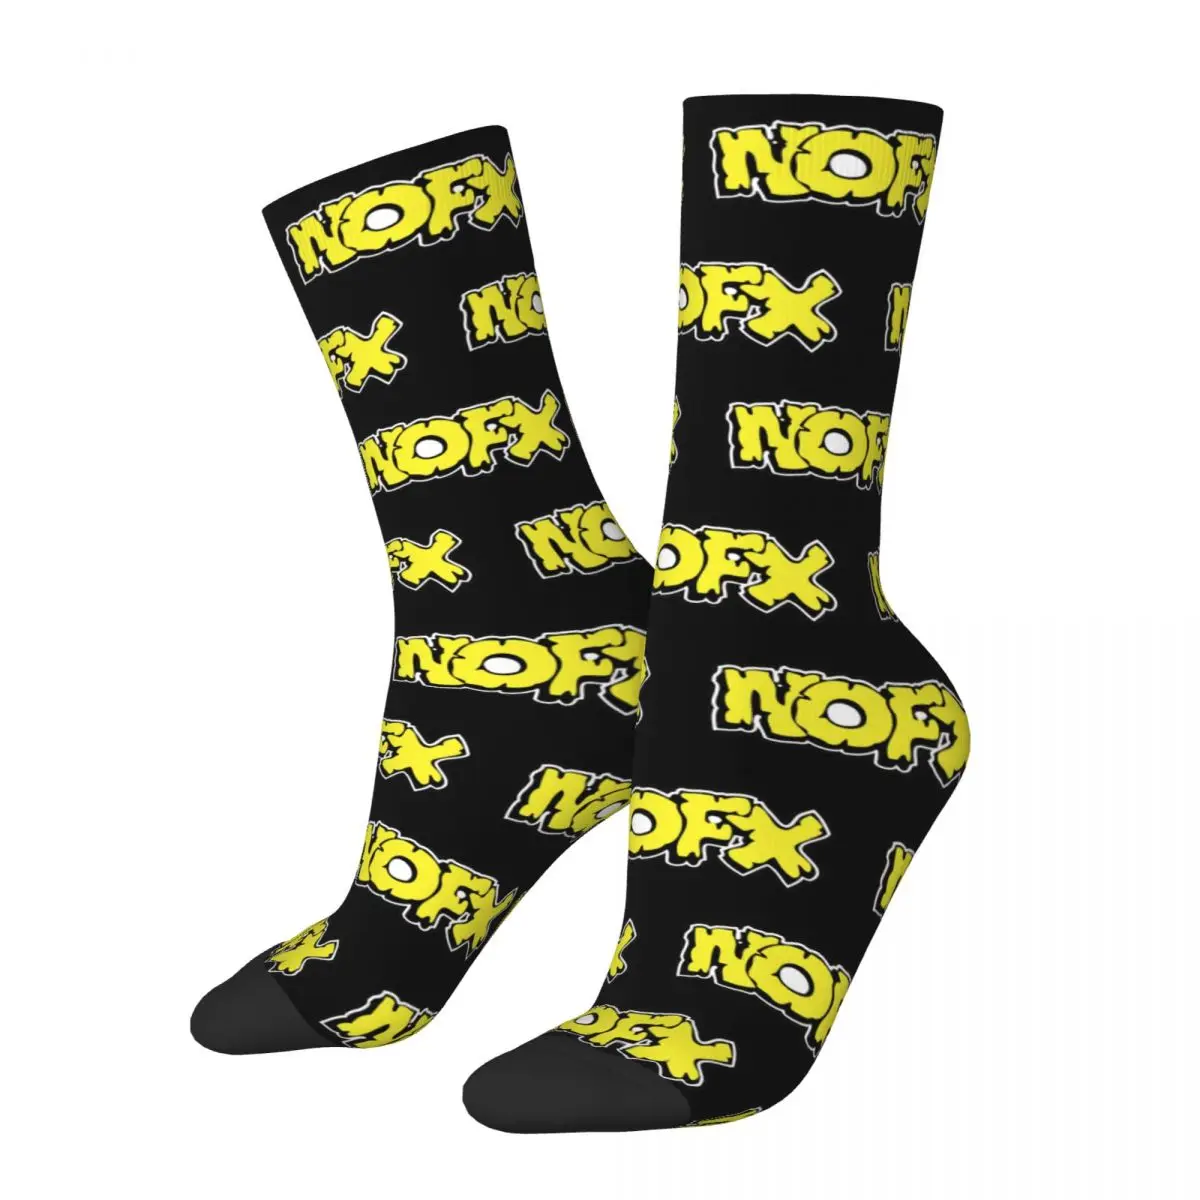 

Rock NOFX Punk Band Stuff Socks Cozy Sport Middle Tube Socks Warm for Men's Birthday Present